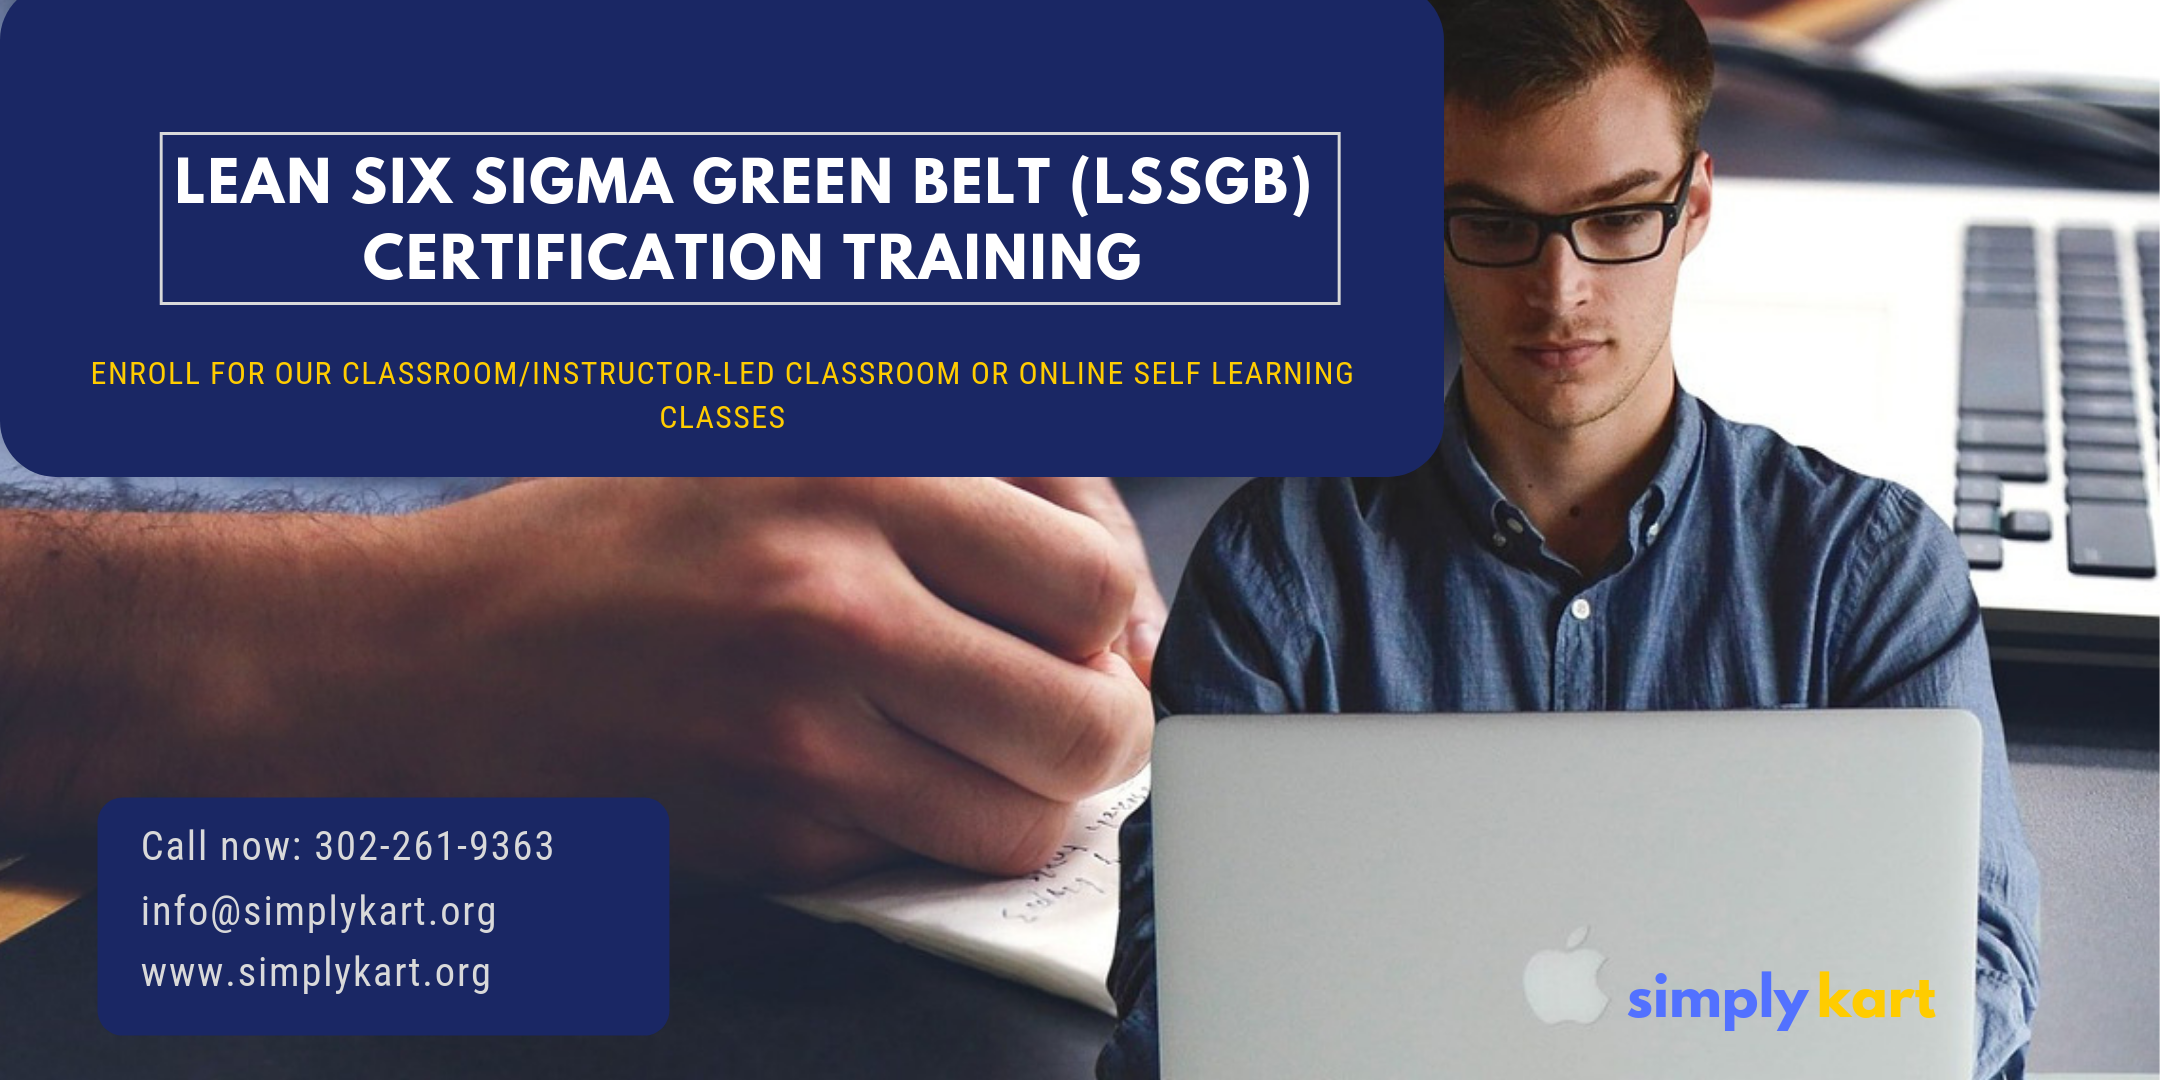 Lean Six Sigma Green Belt (LSSGB) Certification Training in Santa Fe, NM